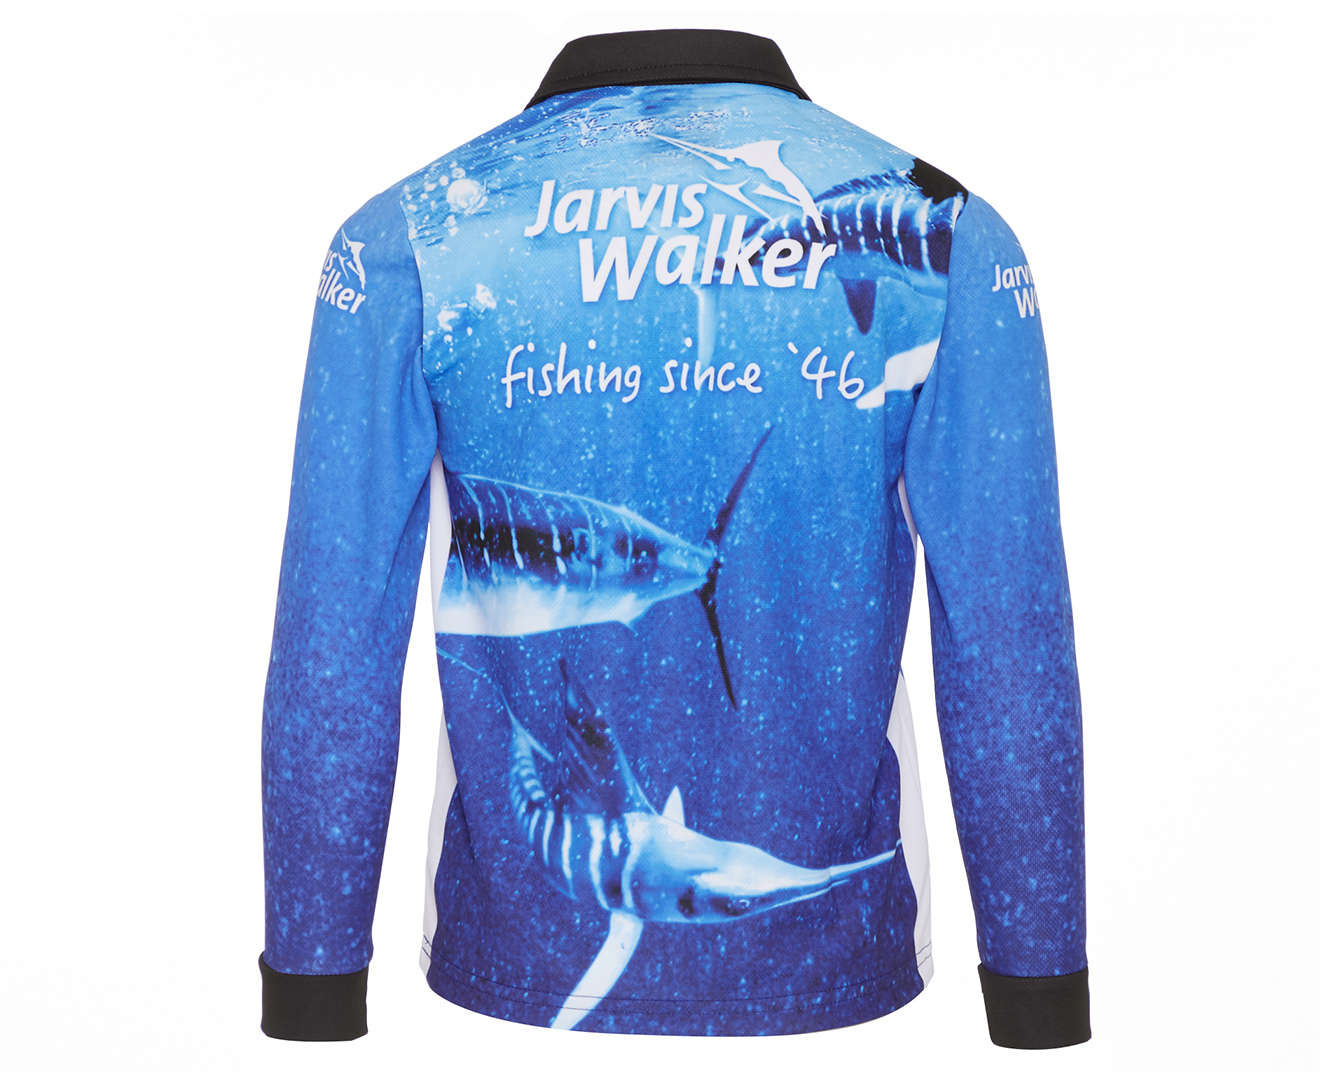 Jarvis Walker Kids Marlin Shirt - Size 8